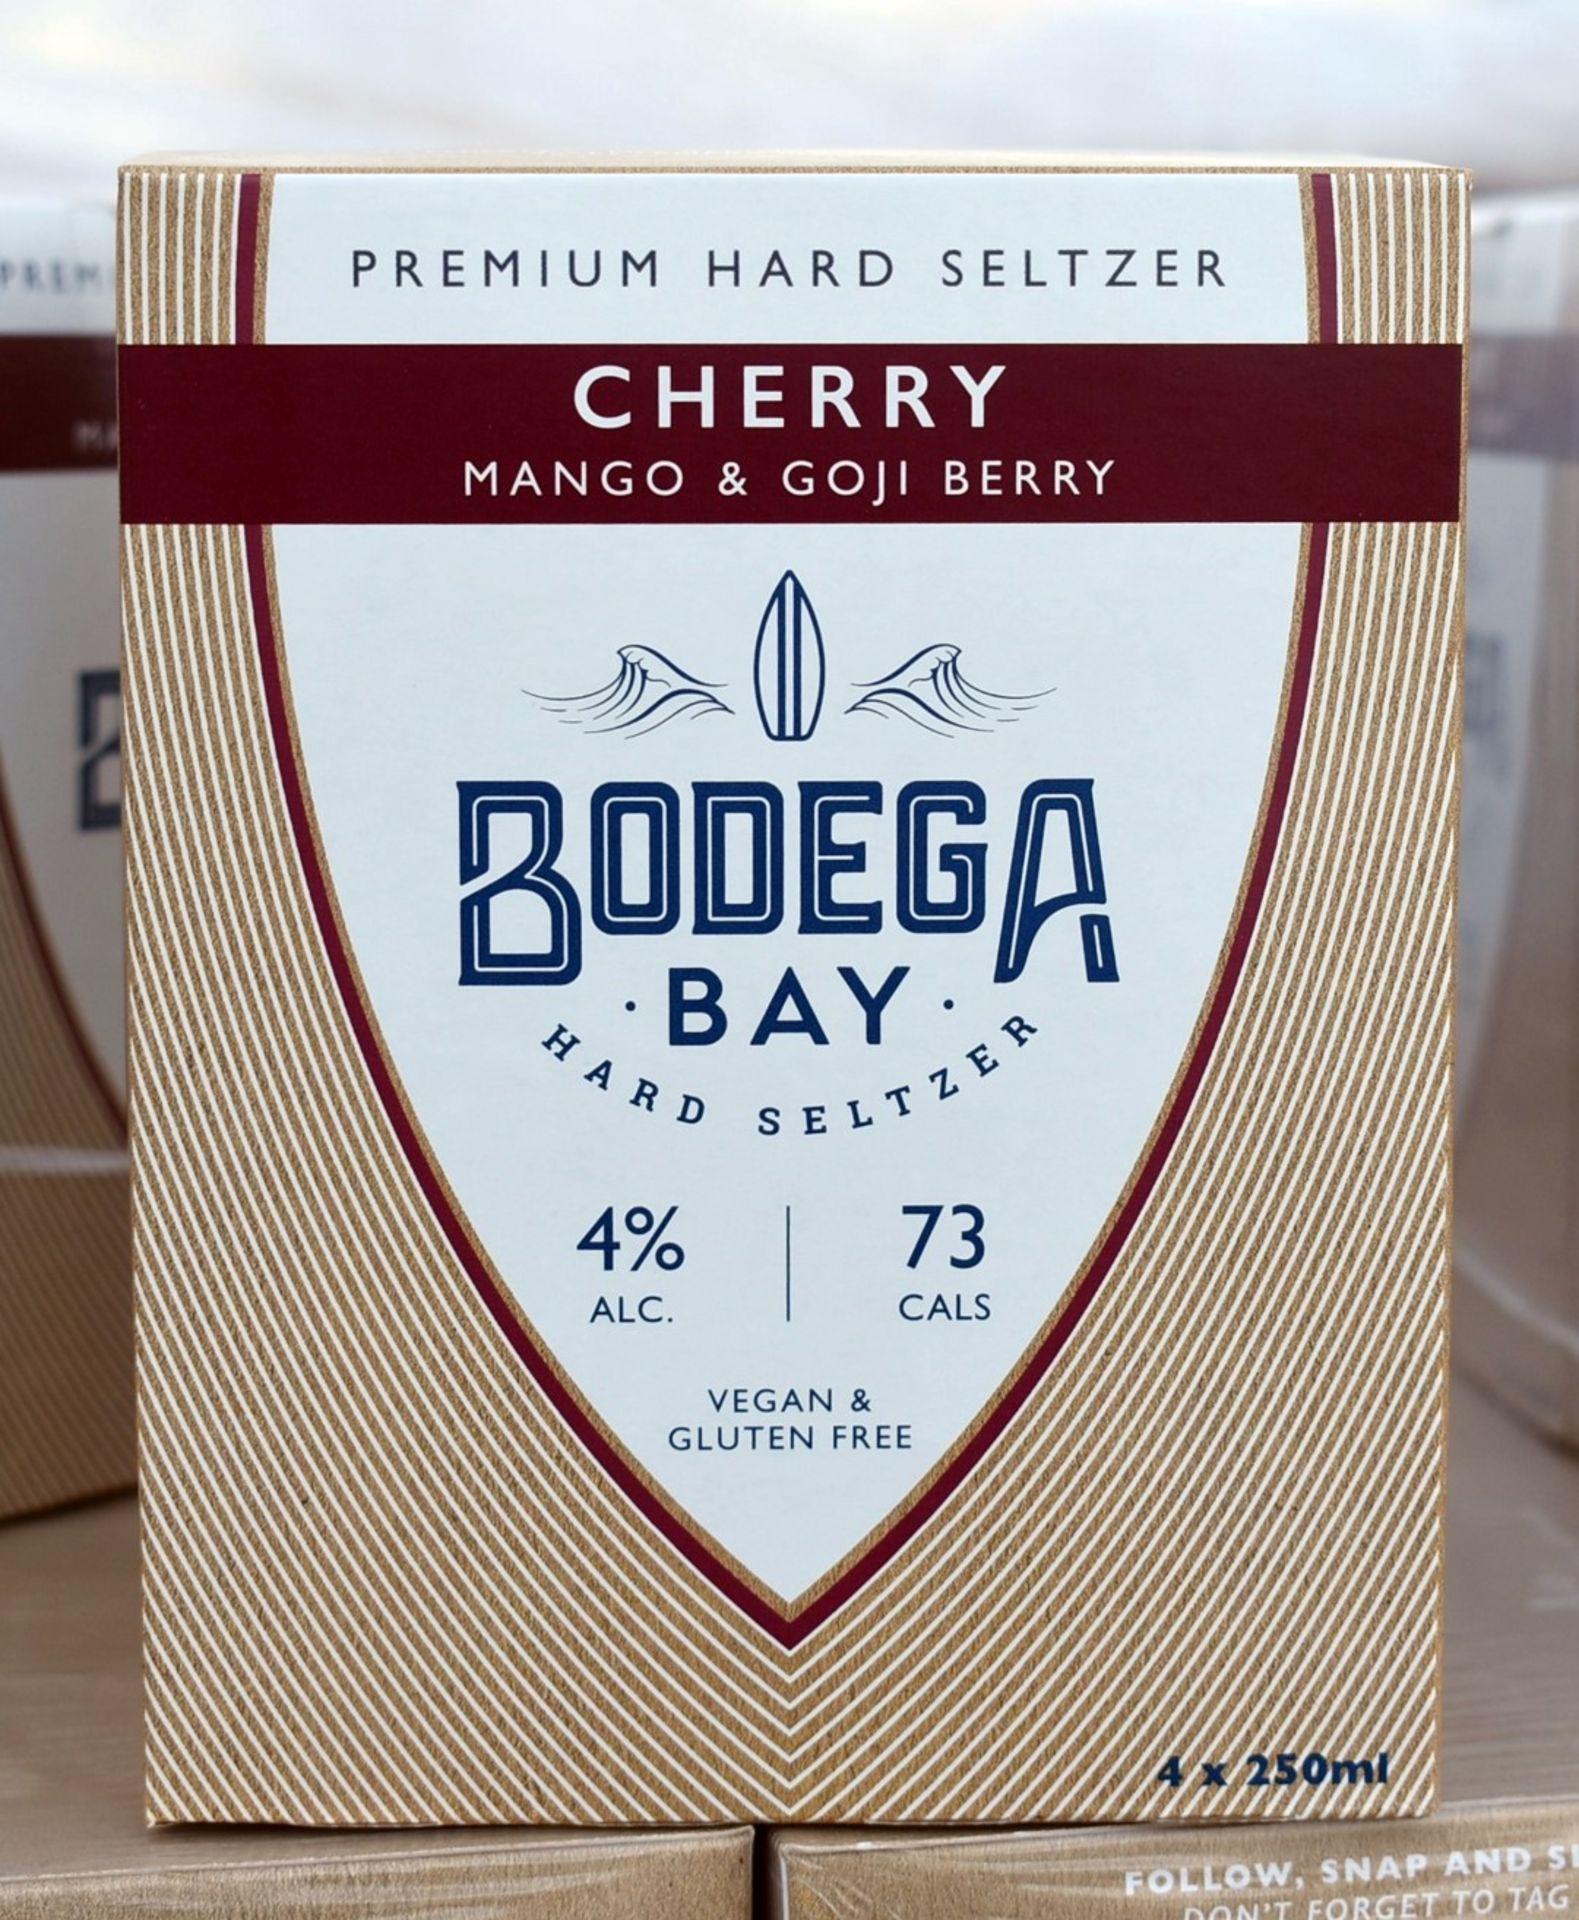 24 x Bodega Bay Hard Seltzer 250ml Alcoholic Sparkling Water Drinks - Cherry Mango & Goji Berry - 4% - Image 6 of 7